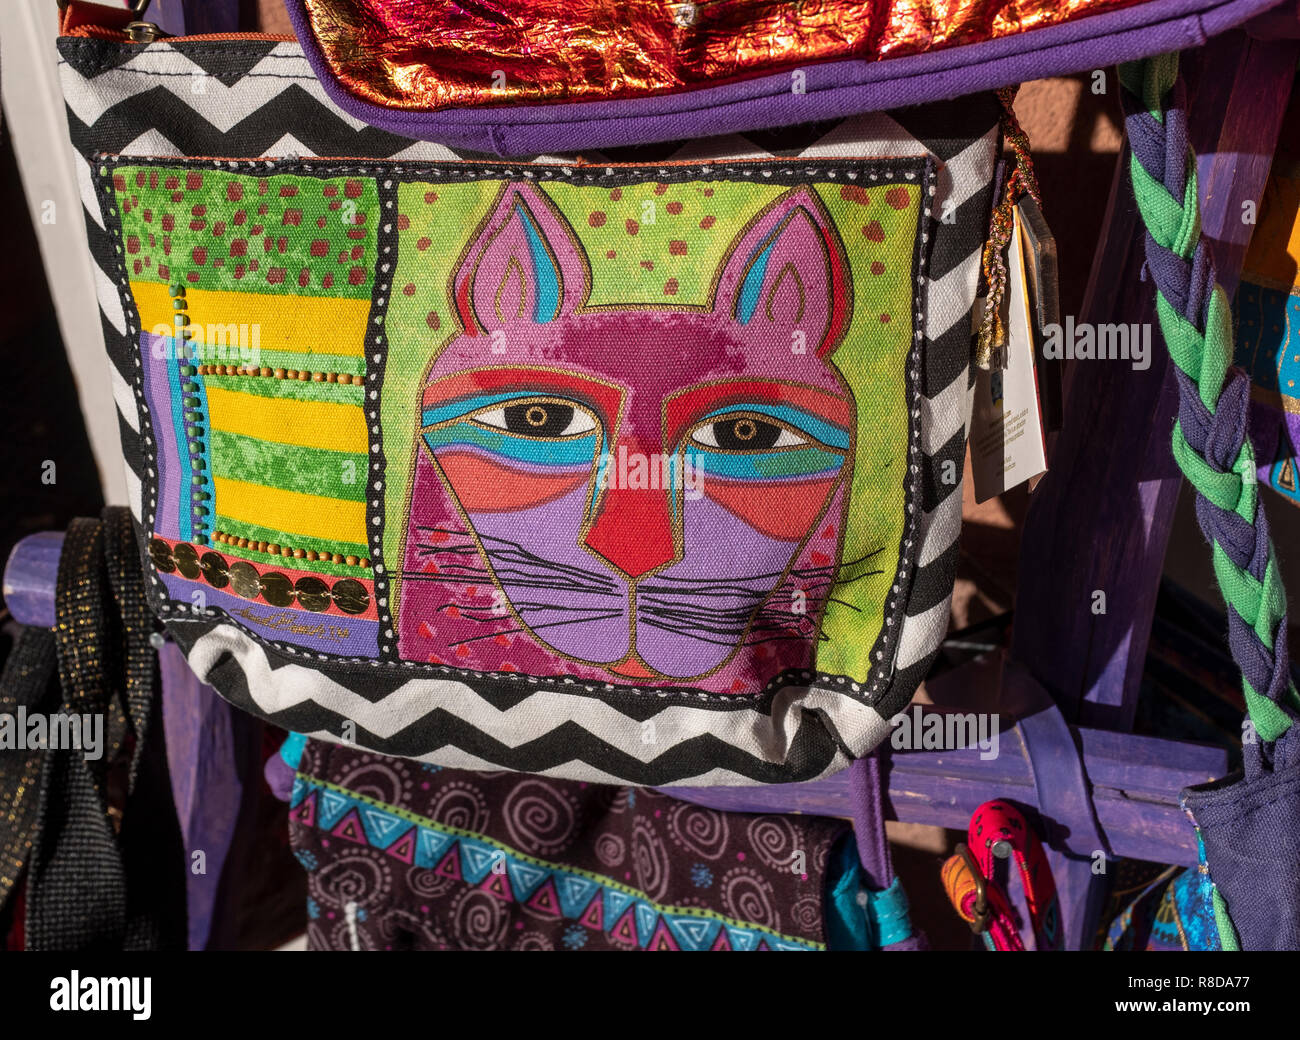 Laurel Burch Small Canvas Purse Tote Bag Handbag Global Spirit | eBay